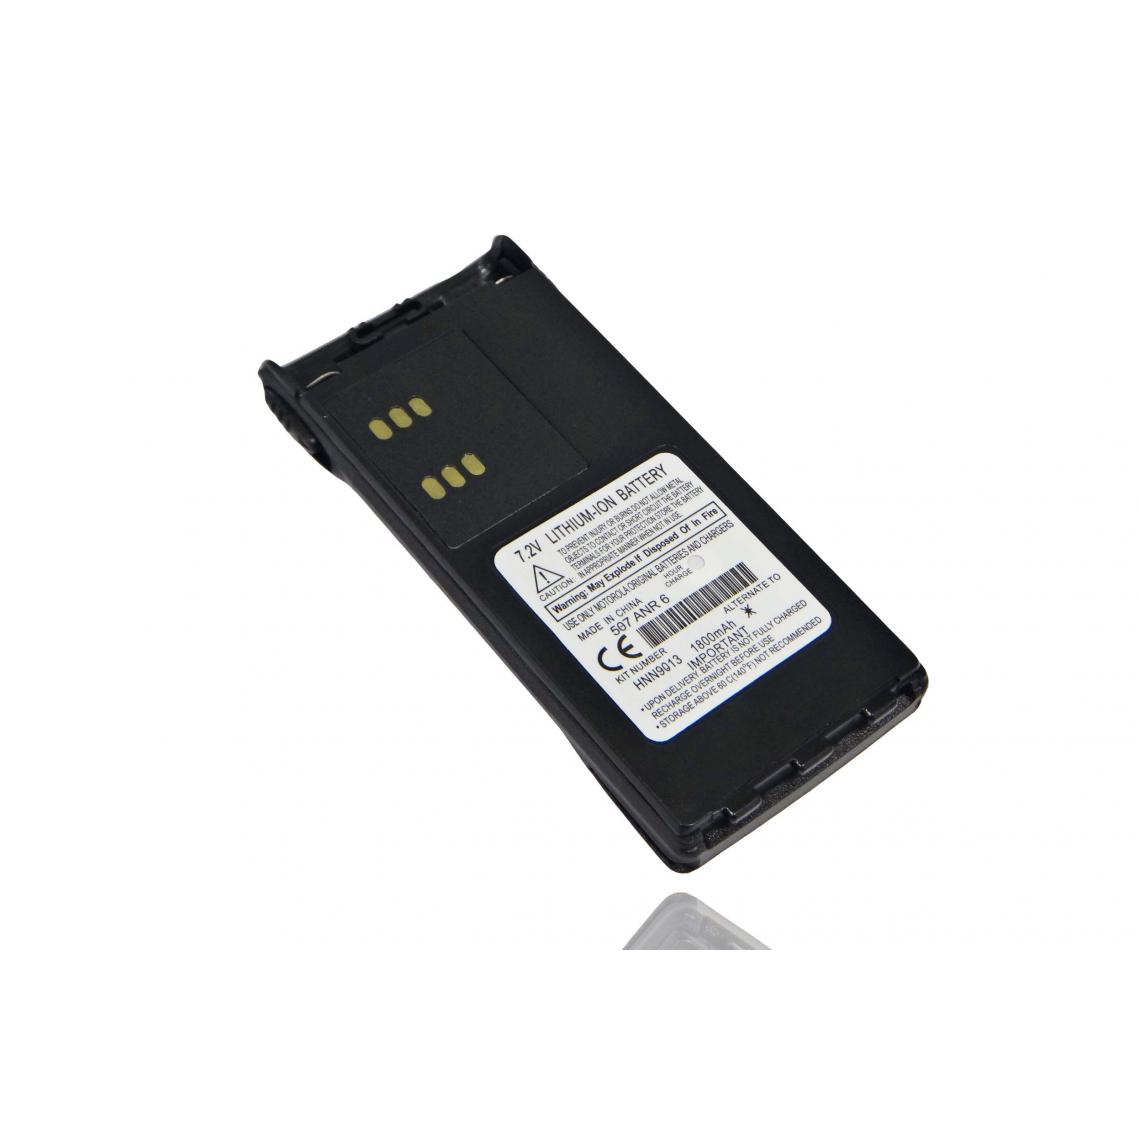 Vhbw - vhbw Batterie compatible avec Motorola GP330 radio talkie-walkie (1800mAh, 7,2V, Li-ion) - Autres accessoires smartphone